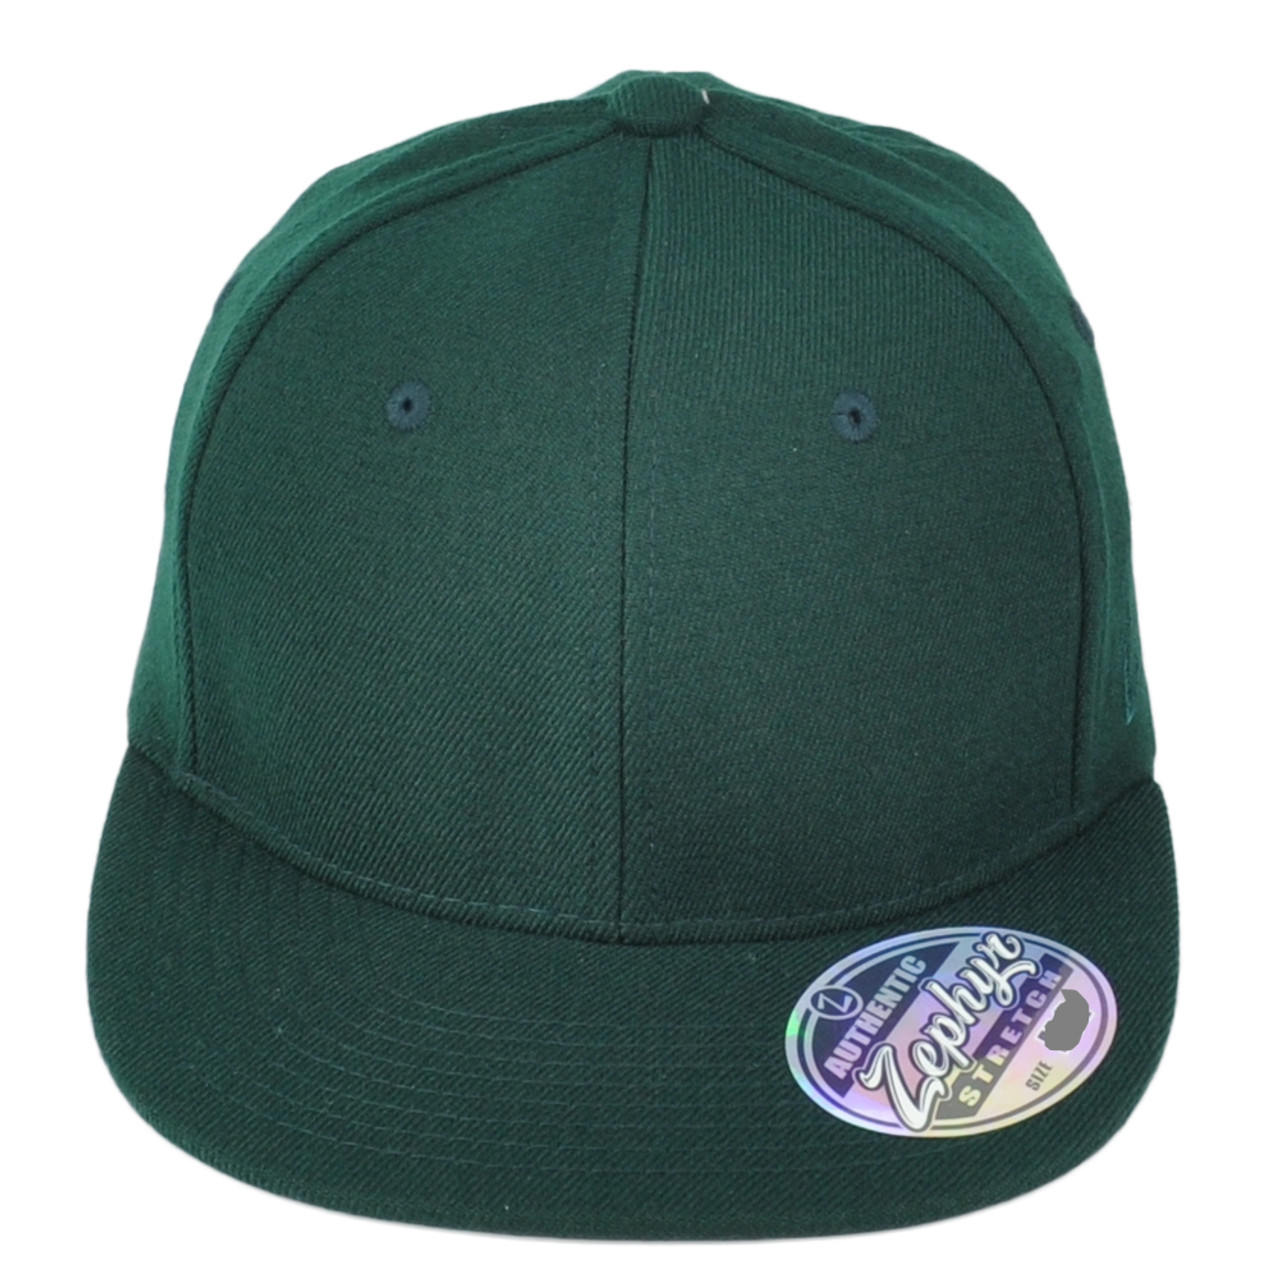 Cap Fit Green Flat Stretch Blank Store Hat Flex Bill Zephyr Forest Medium/Large - Dark Cap